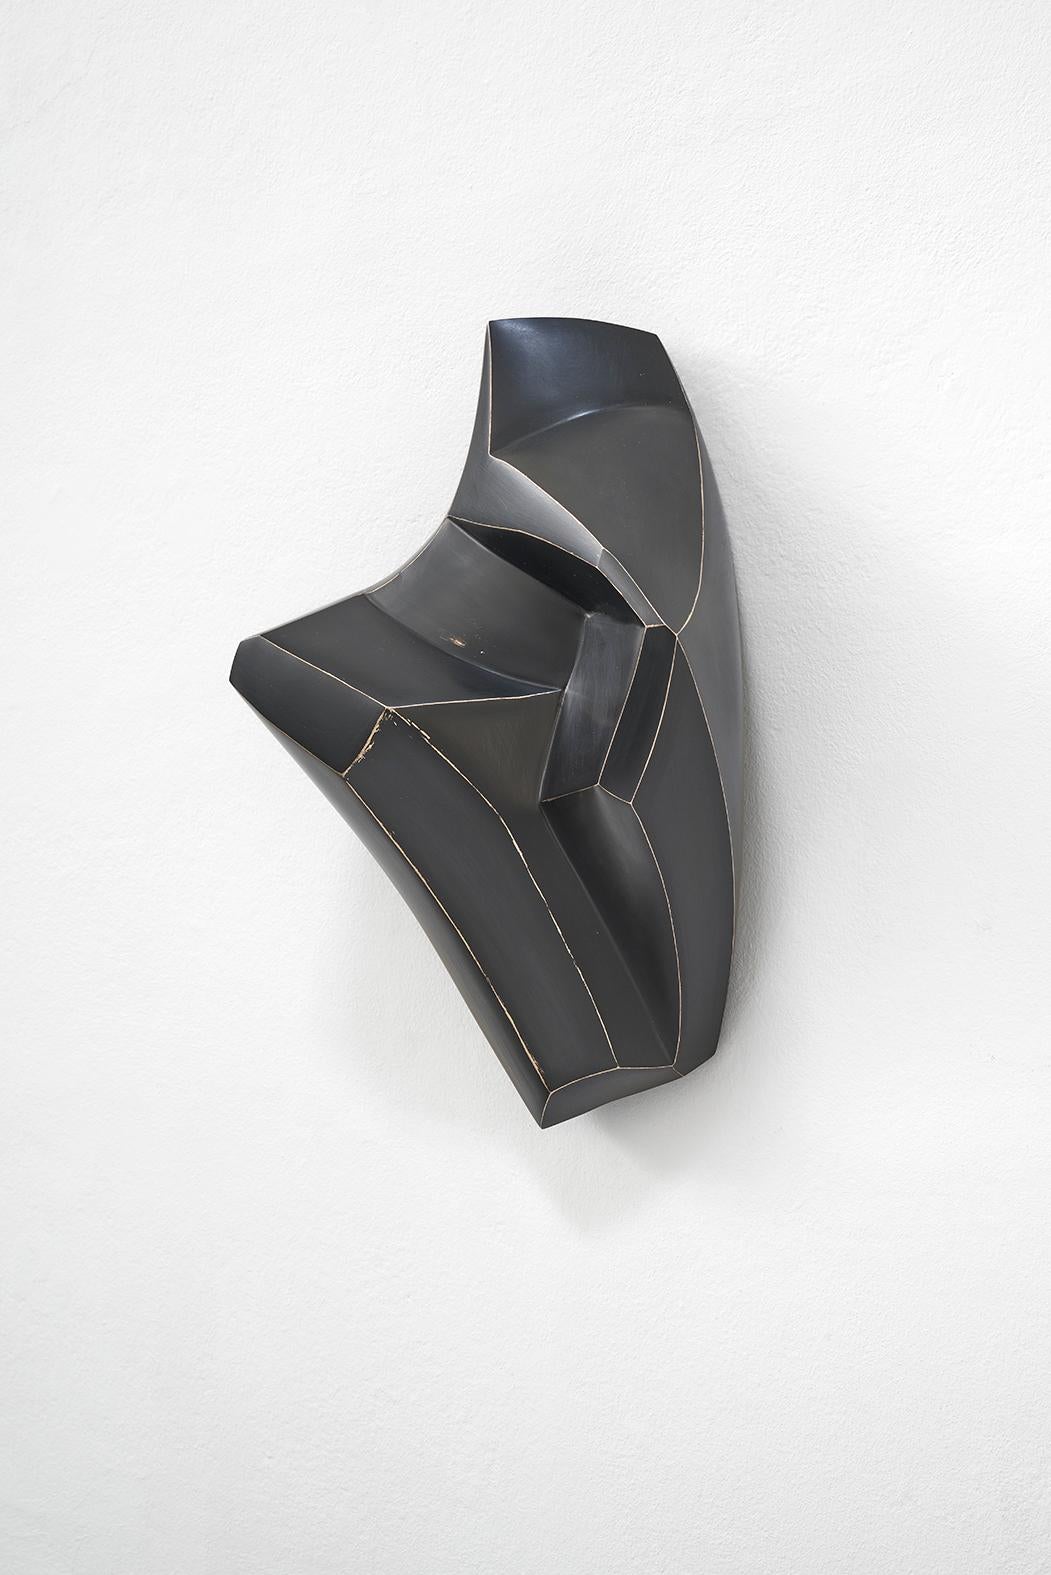 Sculptures 'Wandobjekt' by Carola Eggeling, Bronze and Aluminum For Sale 6